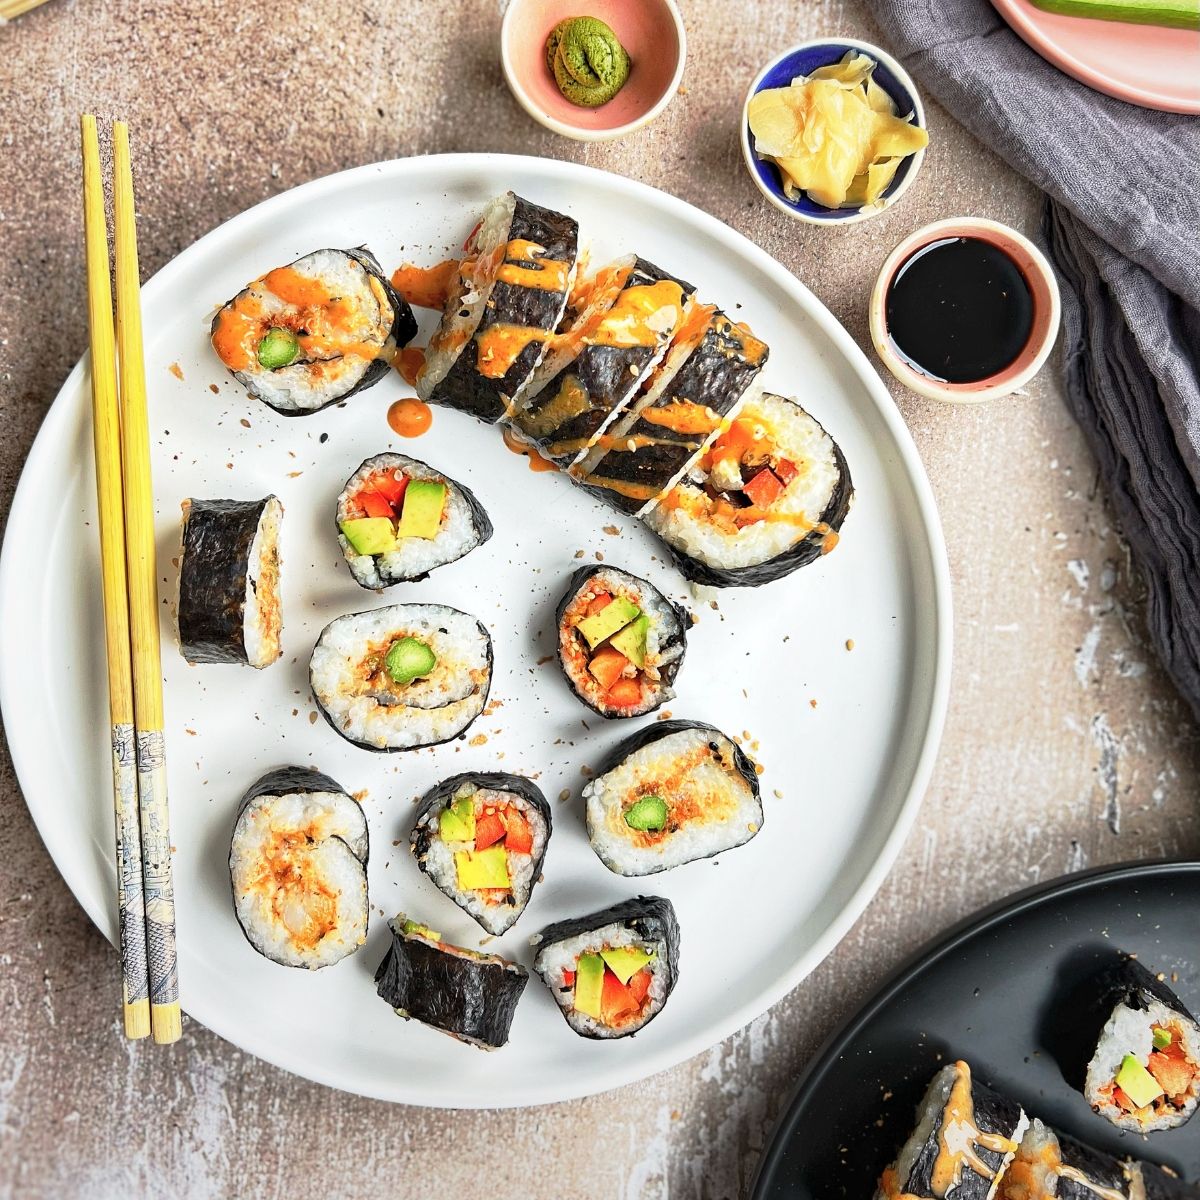 Sushi Kit – deSIAMCuisine (Thailand) Co Ltd